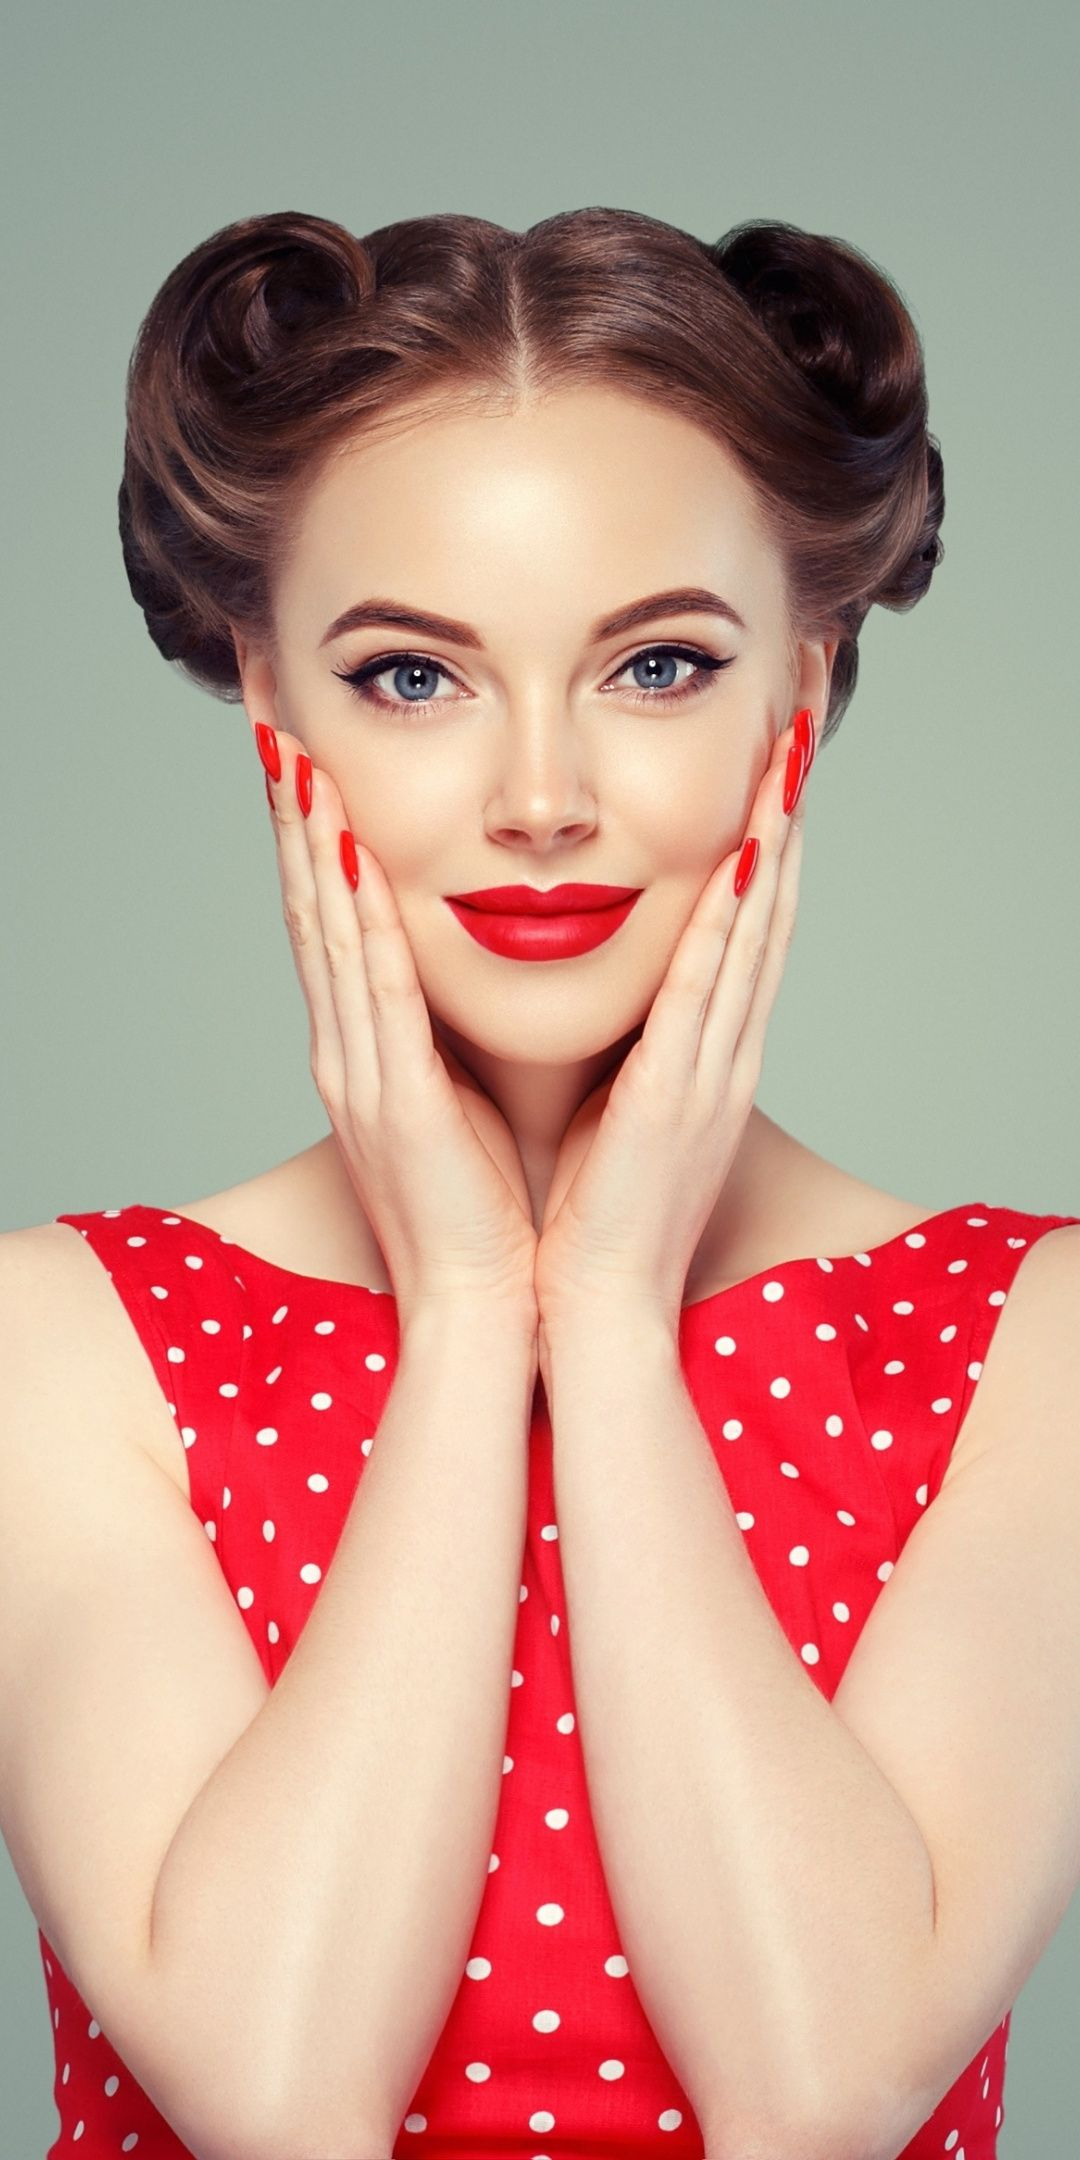 1080x2160 Red lips, makeup, smile, woman model, wallpaper | Makeup, Beautiful makeup, Red lip makeup